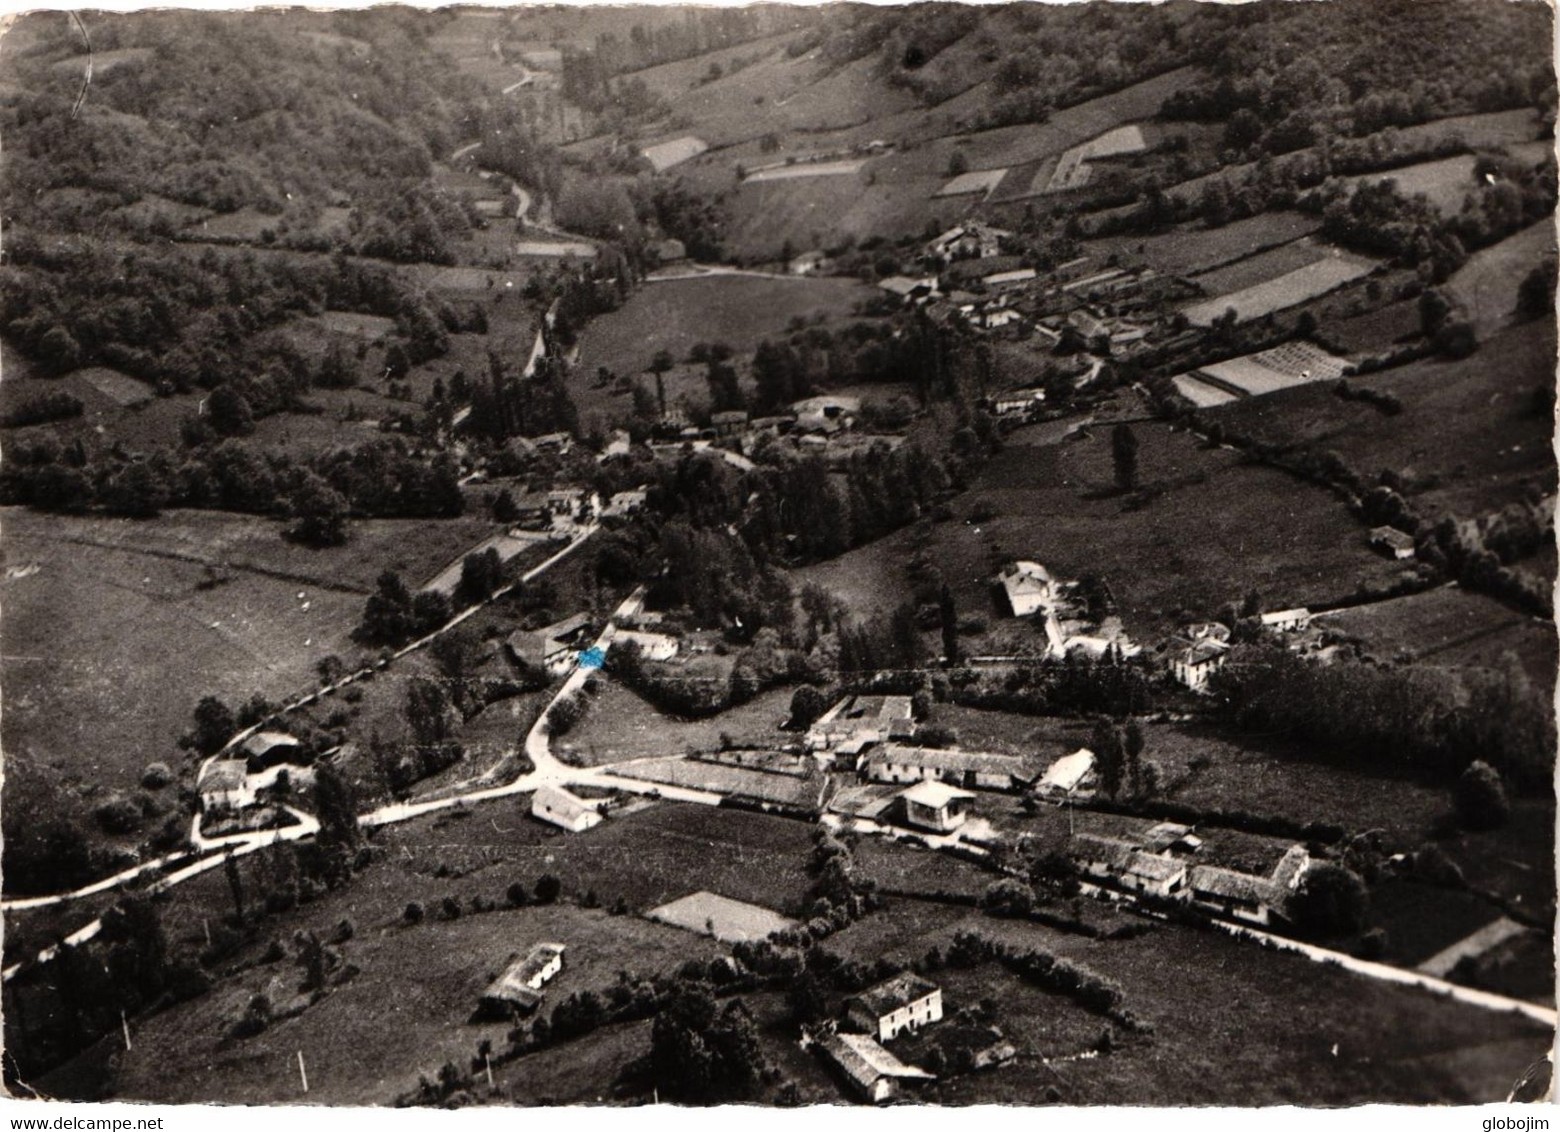 Photo La Ribereuille 1960